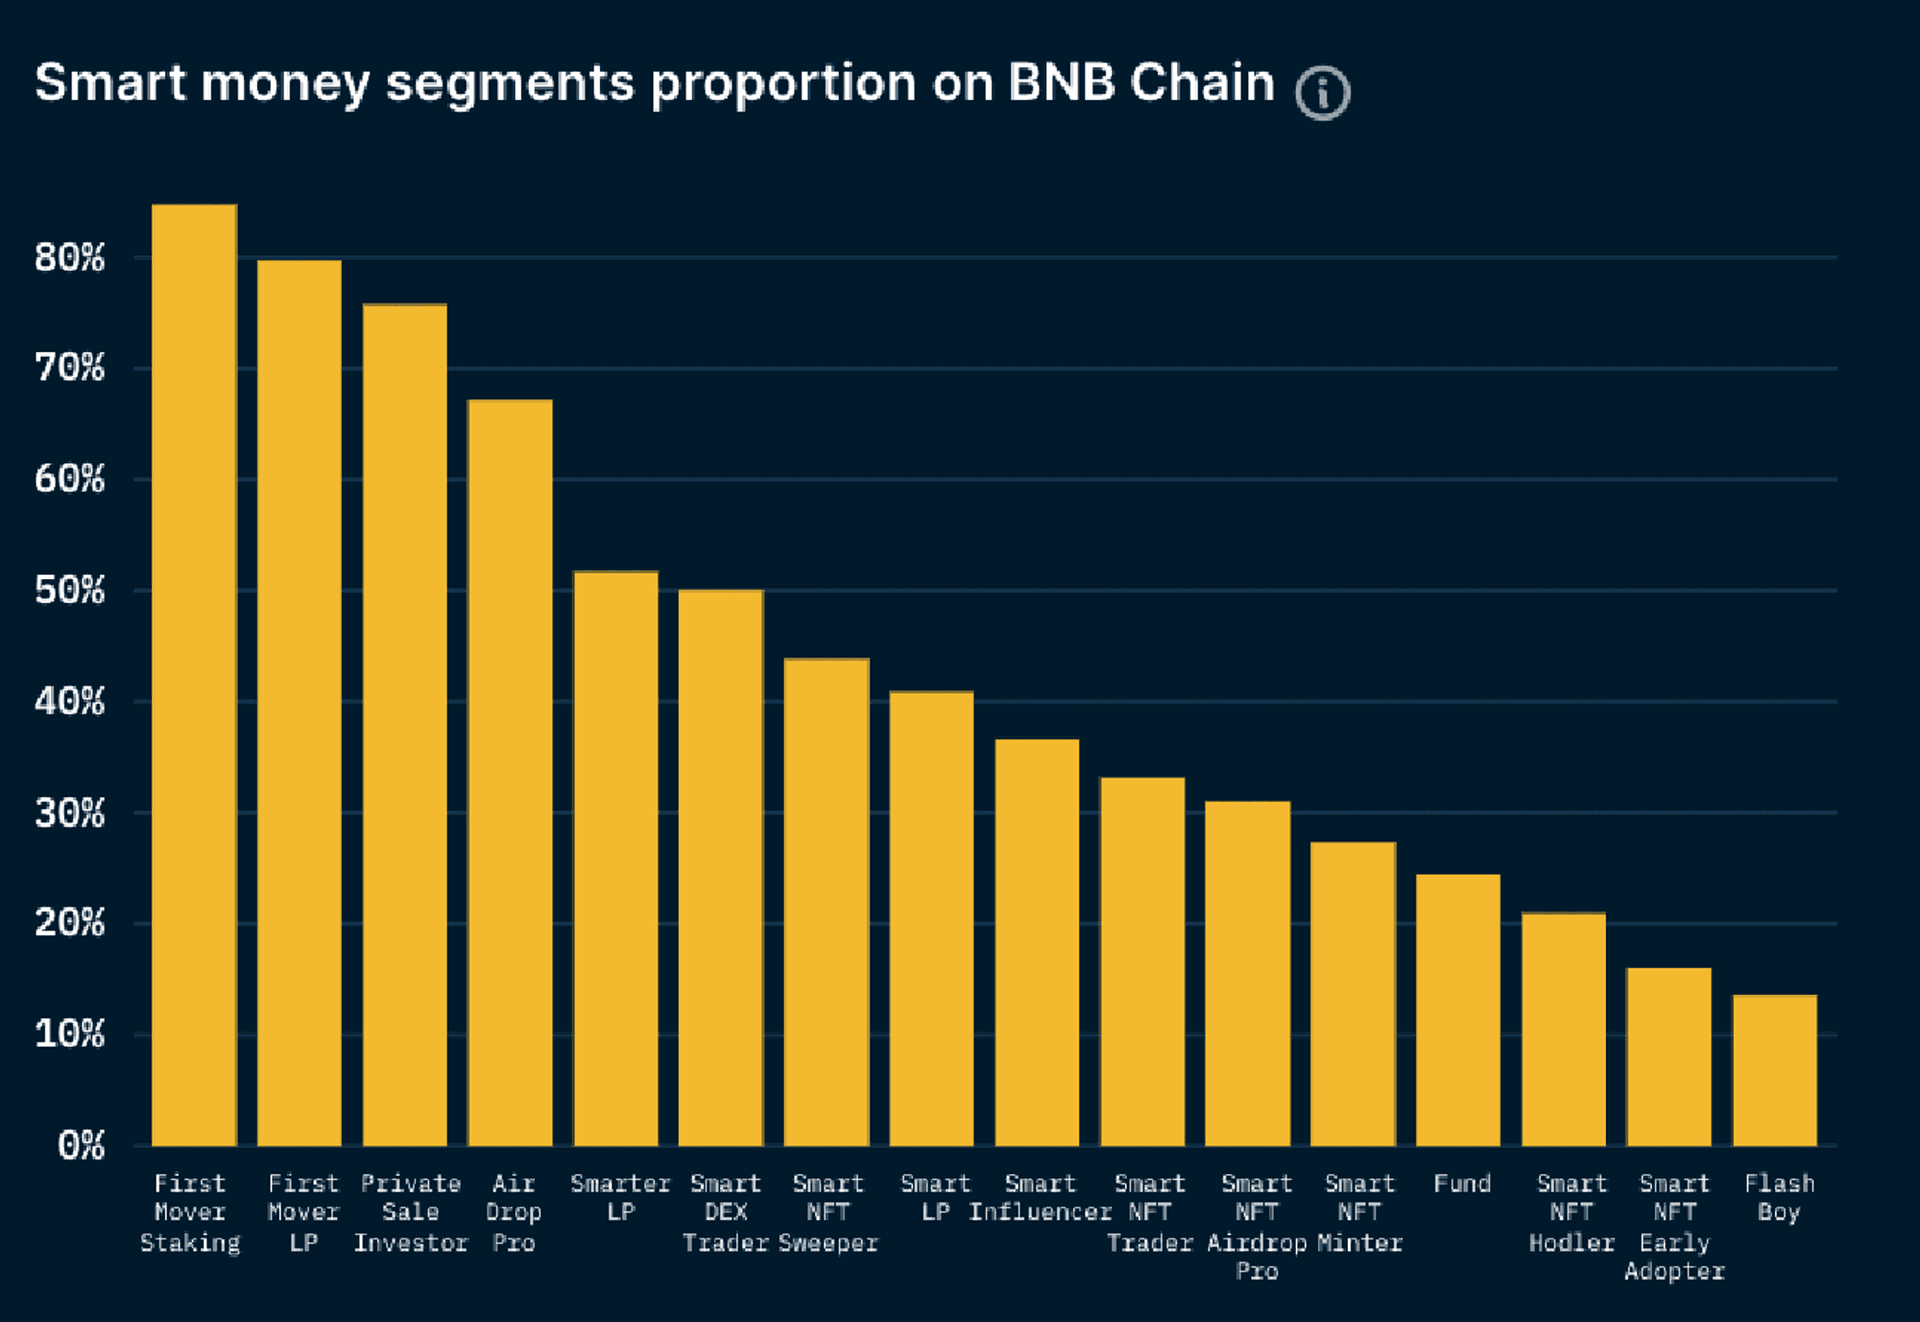 Smart Money Segments Proportion on BNB Chain